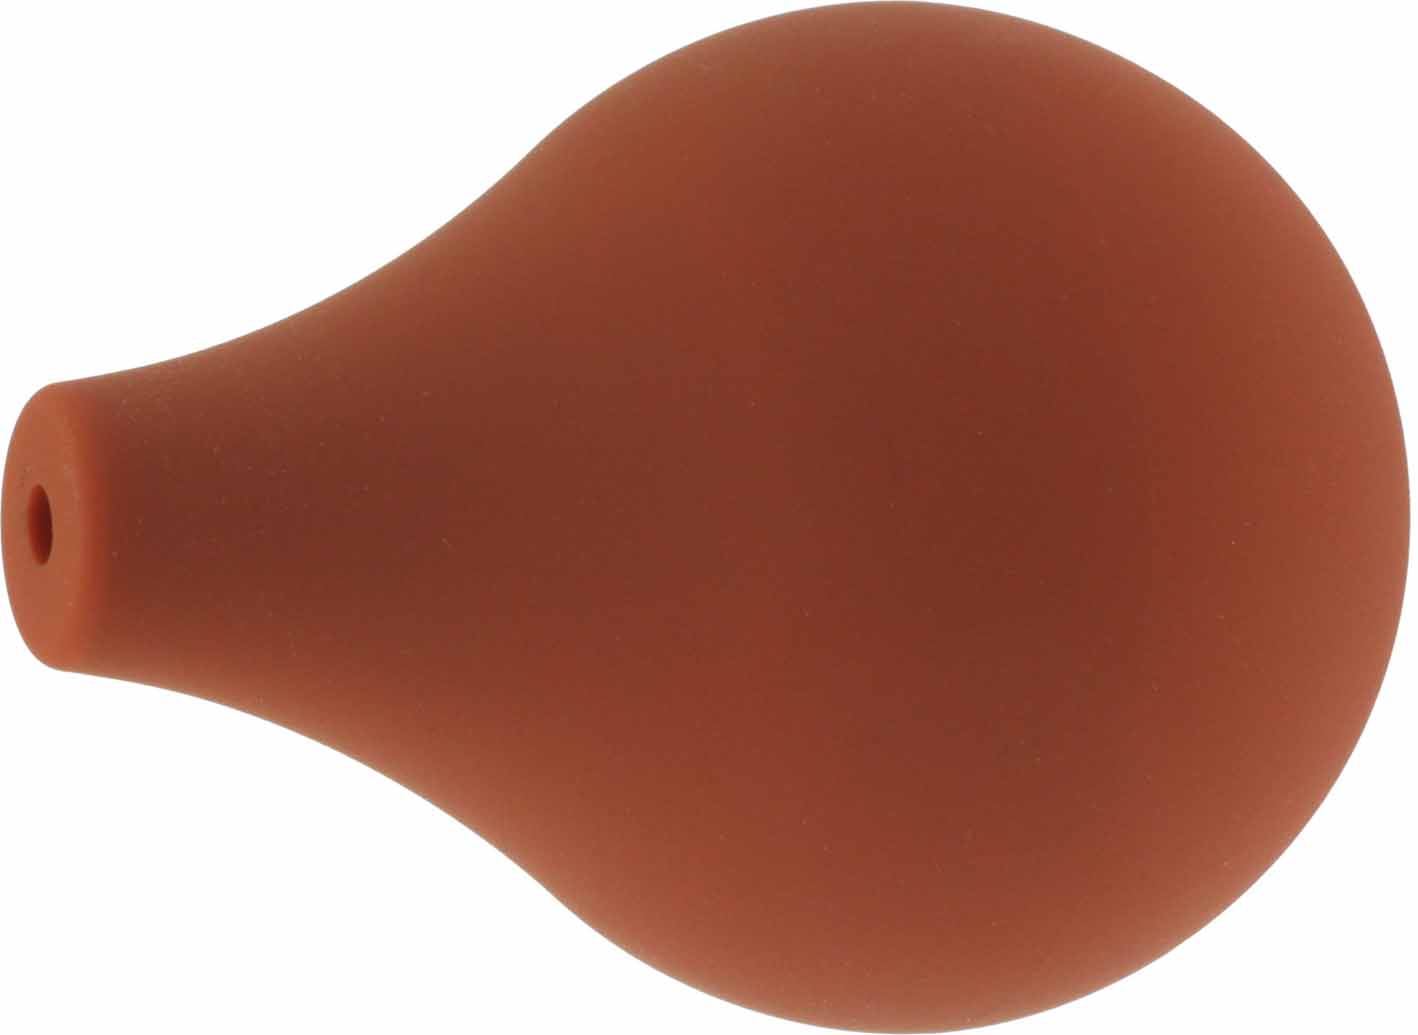 Soplast Disposable Nasal Olives for Nasal Irrigation and Politzer Kit 3  Olives + 1 Syringe : Amazon.co.uk: Baby Products